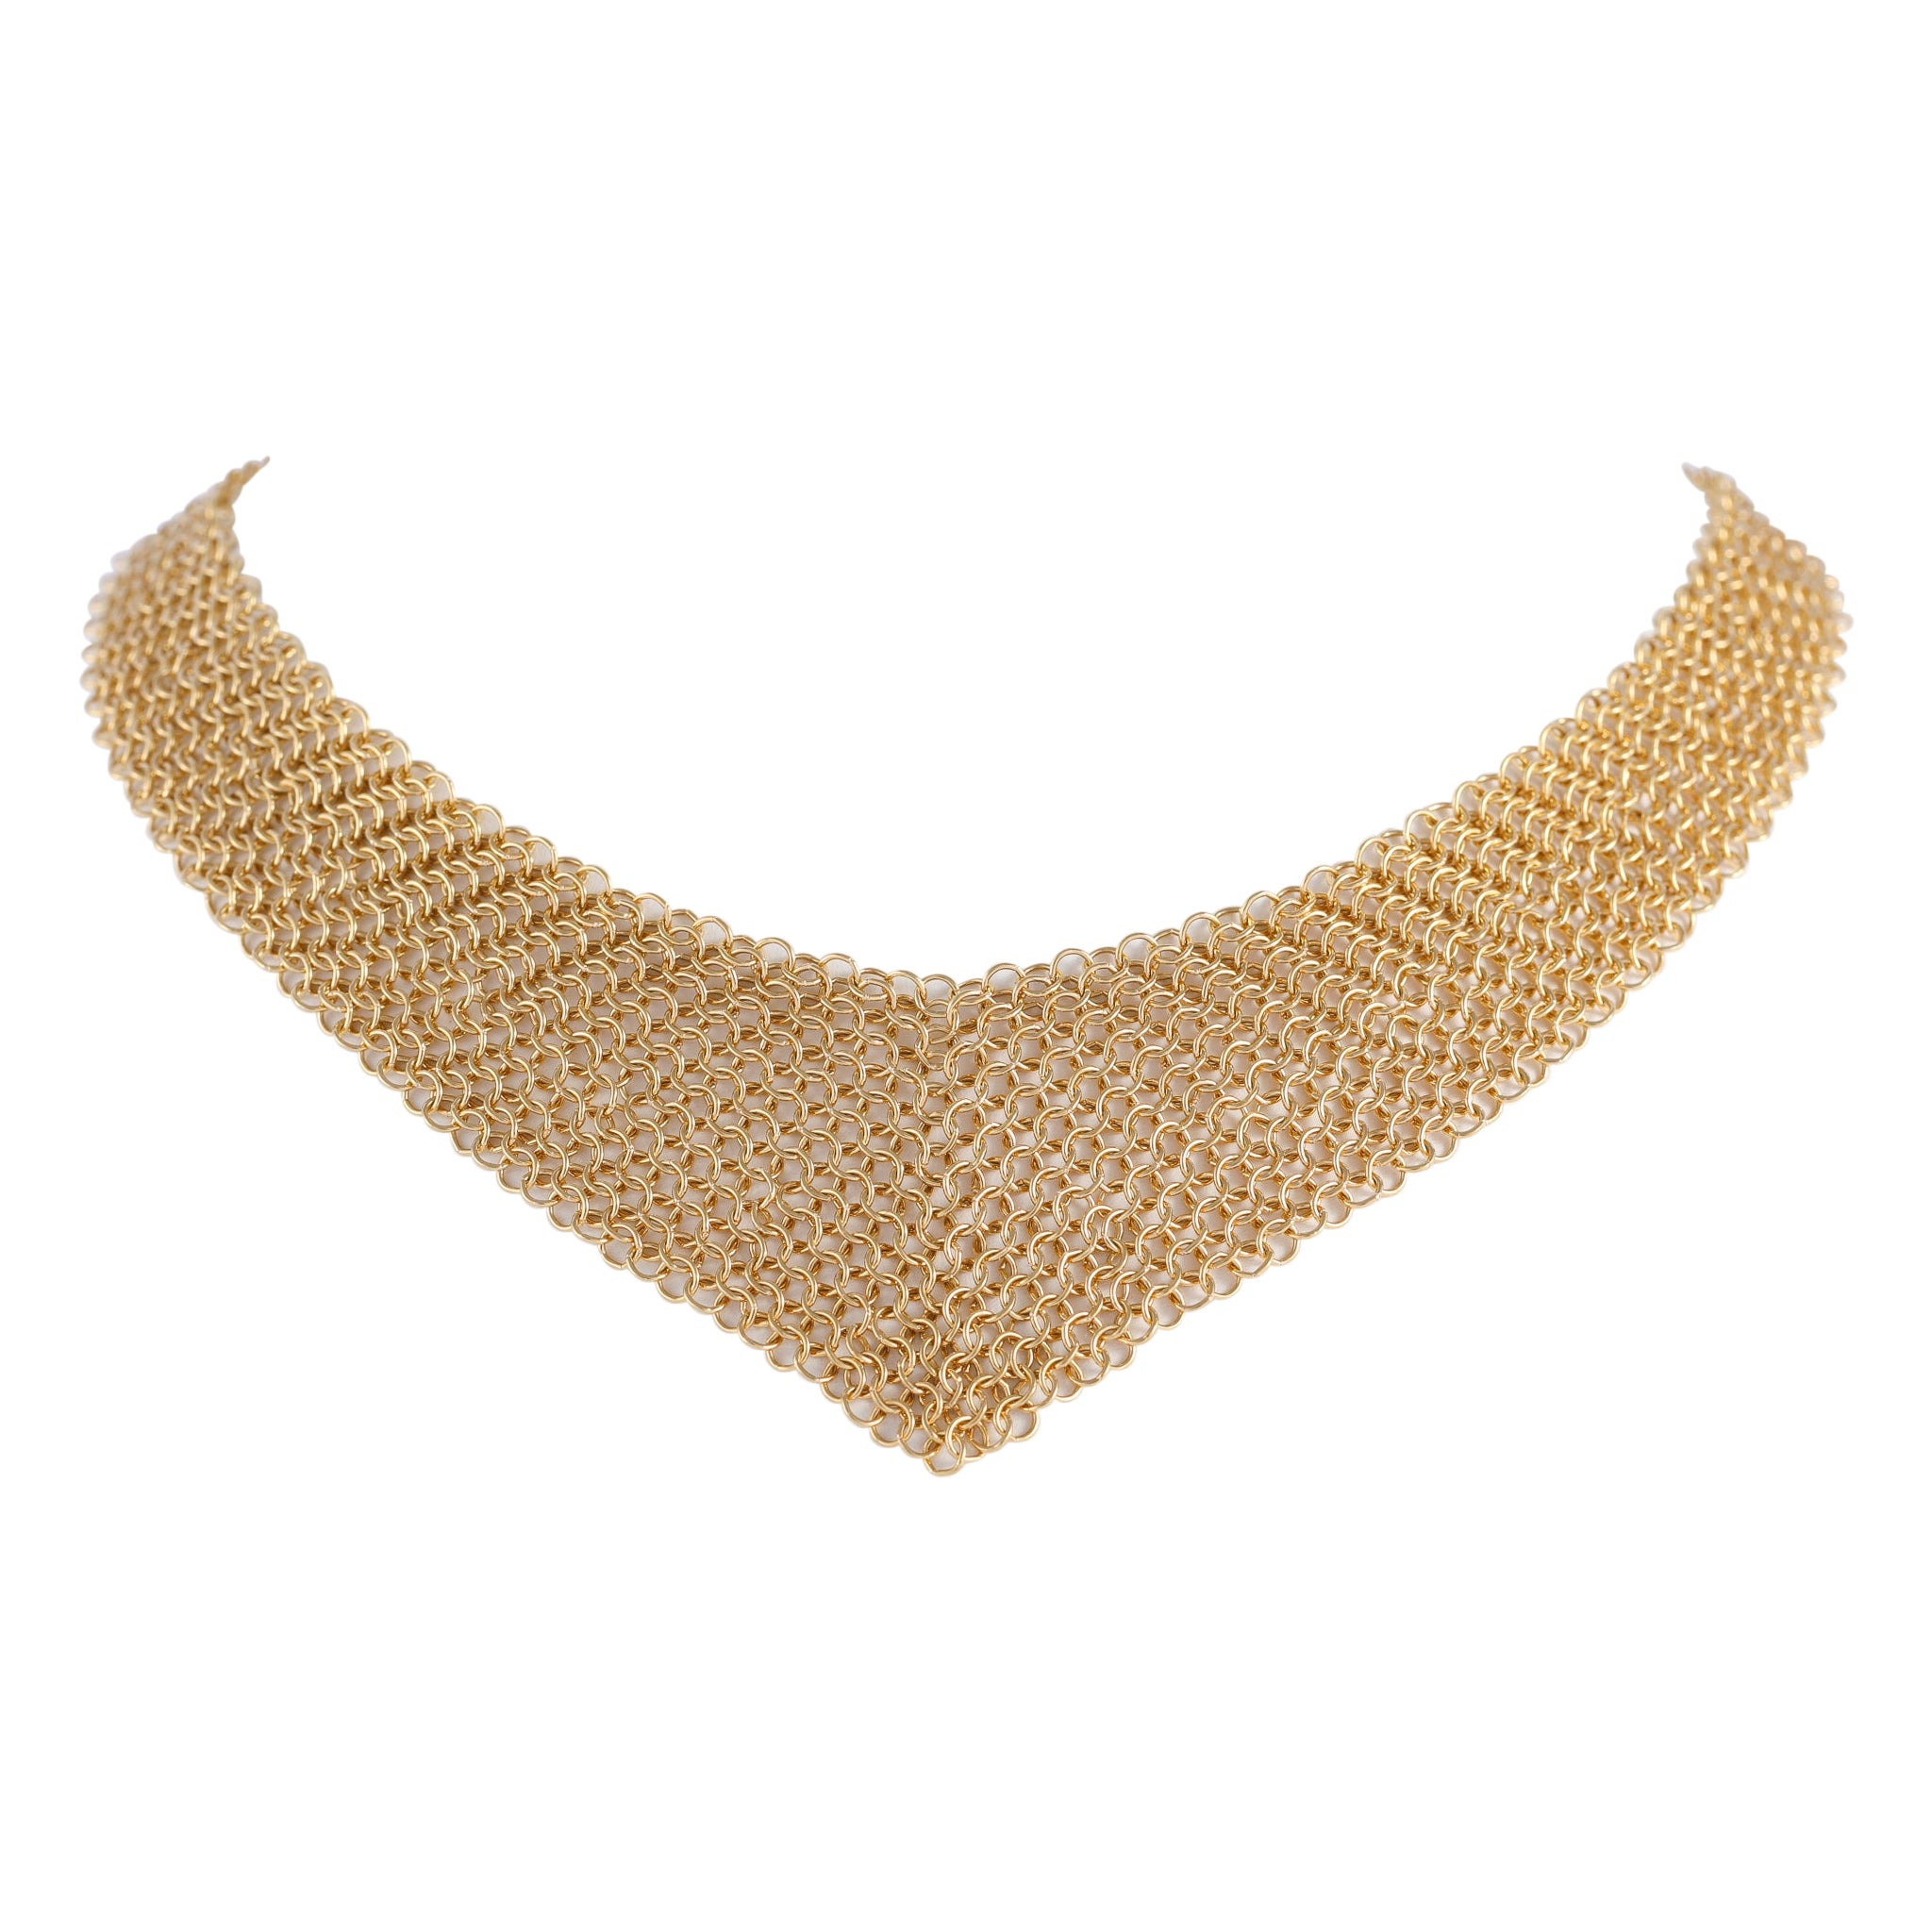 Elsa Peretti for Tiffany & Co. Mesh Scarf Necklace